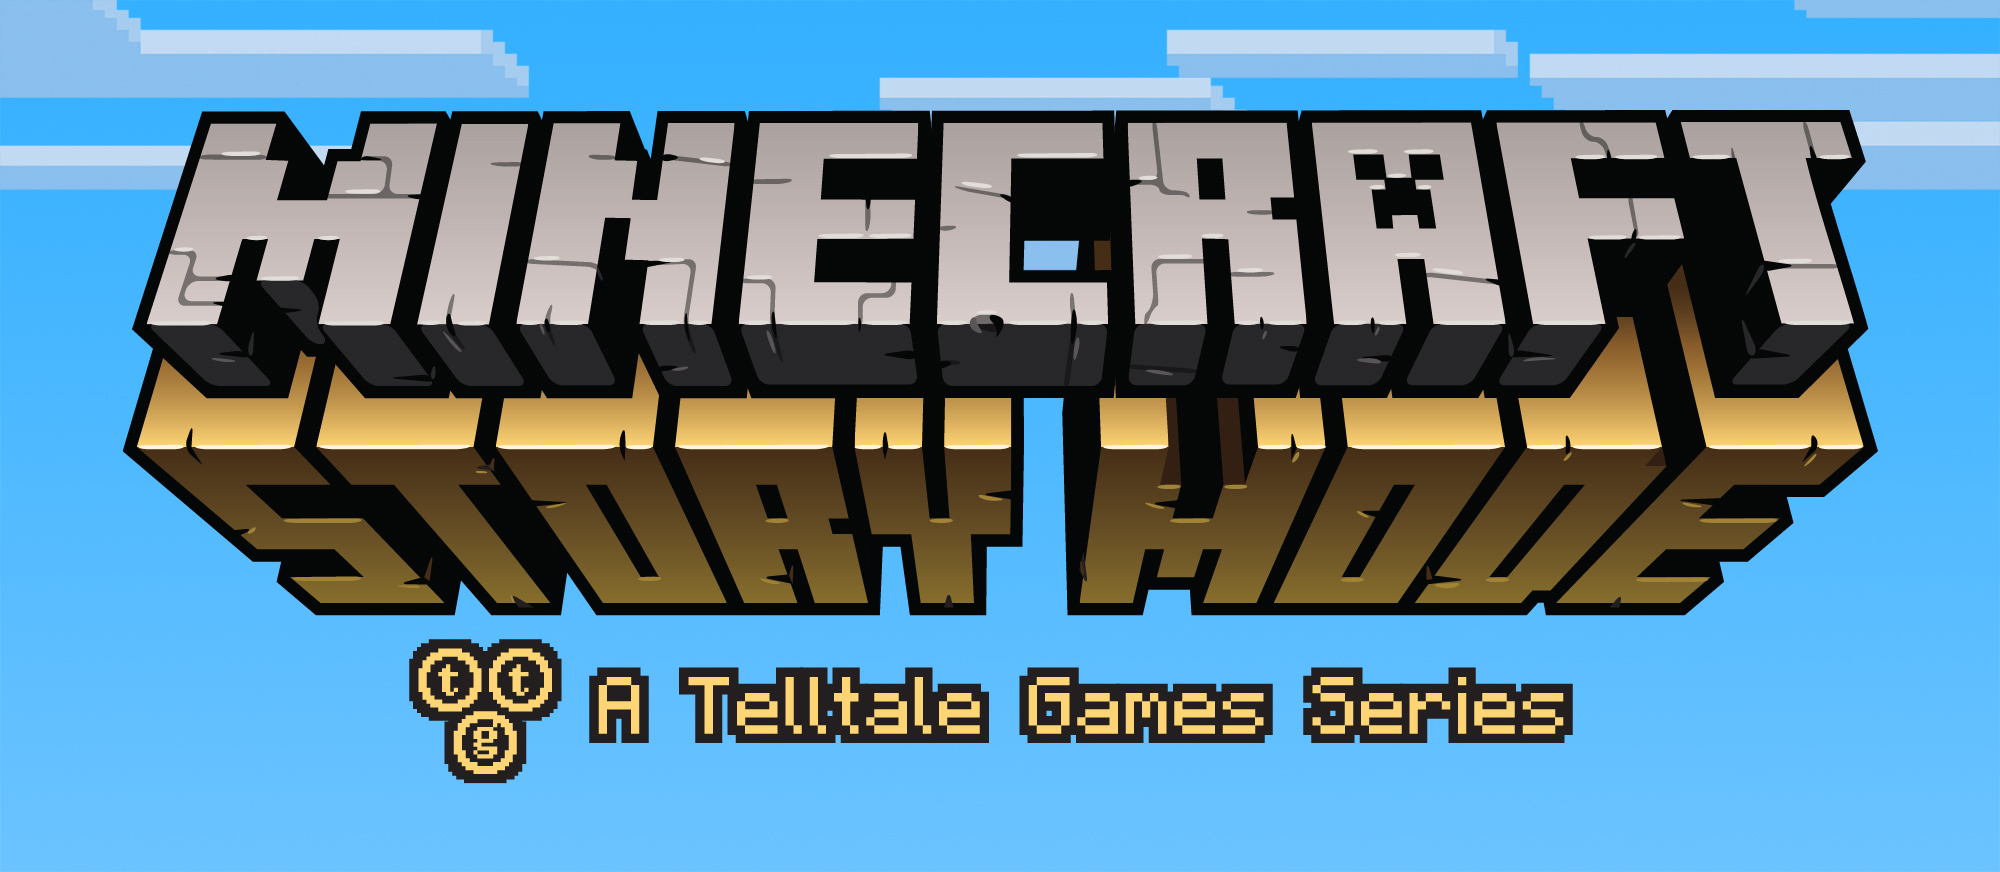 minecraft story mode logo